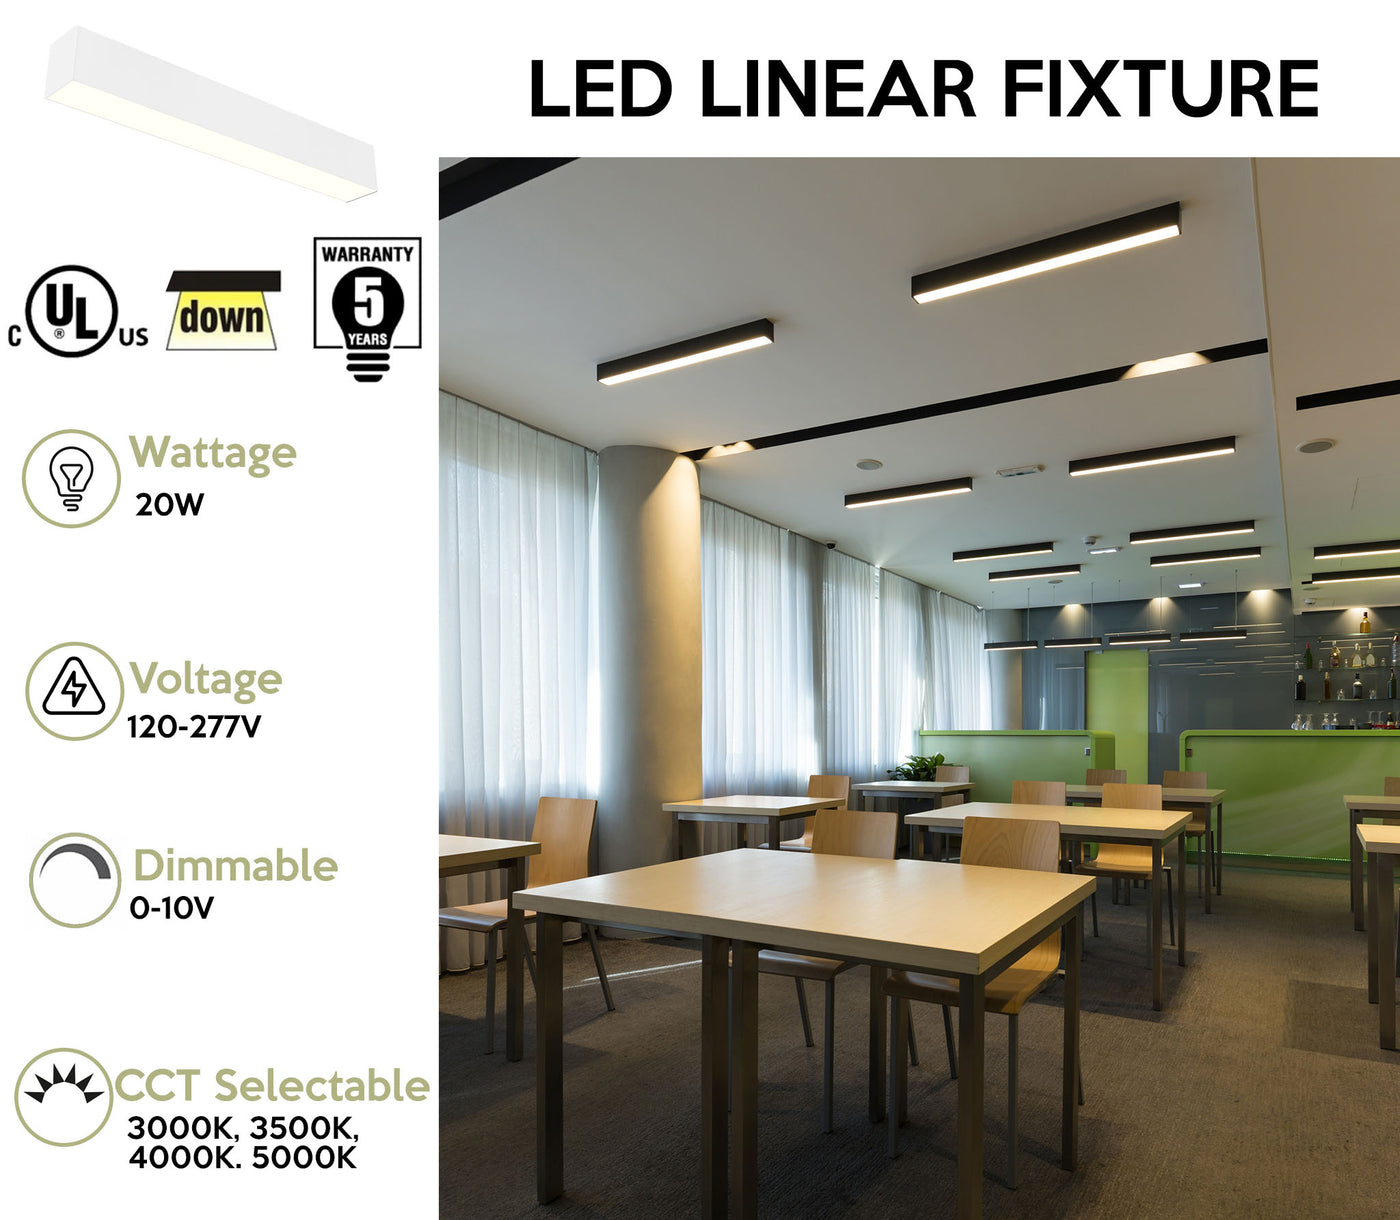 2 FT LED Linear Fixture G2, 2200 Lumen Max, 20W, CCT Selectable, 120-277V, Black or White Finish